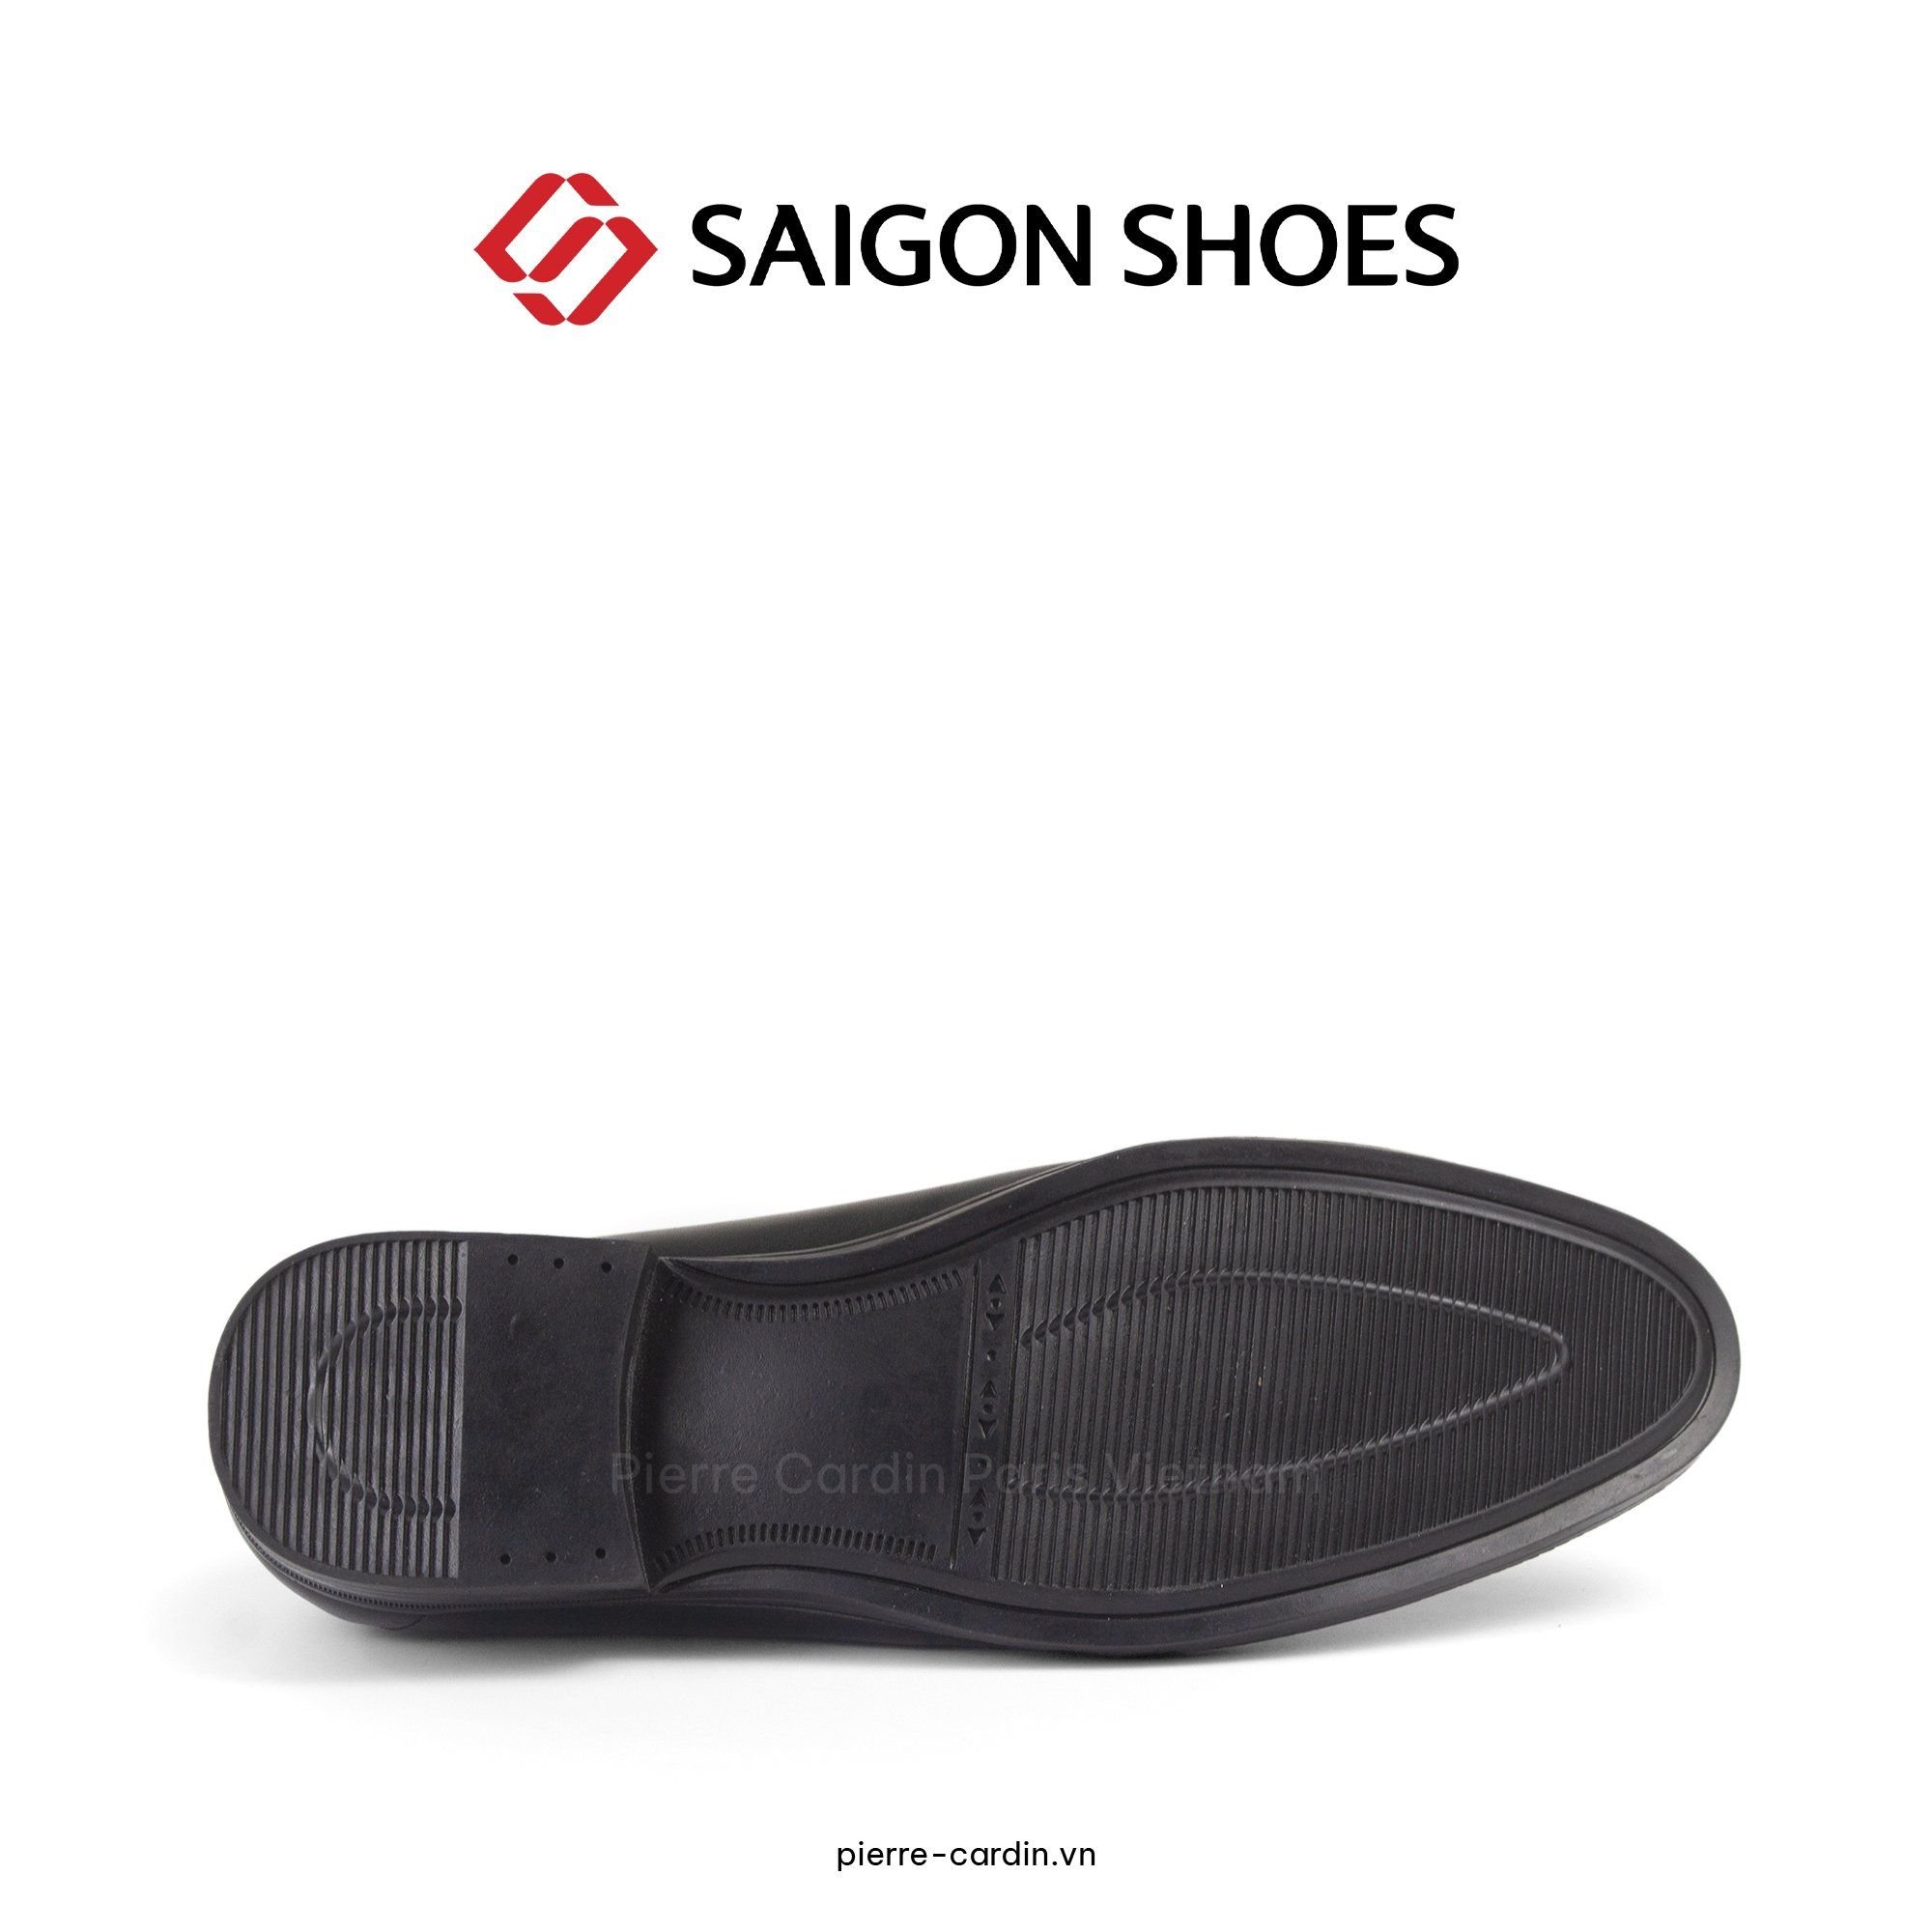 Pierre Cardin Paris Vietnam: Giày Lười Khóa Horsebit Saigon Shoes - SGMFWLH 010